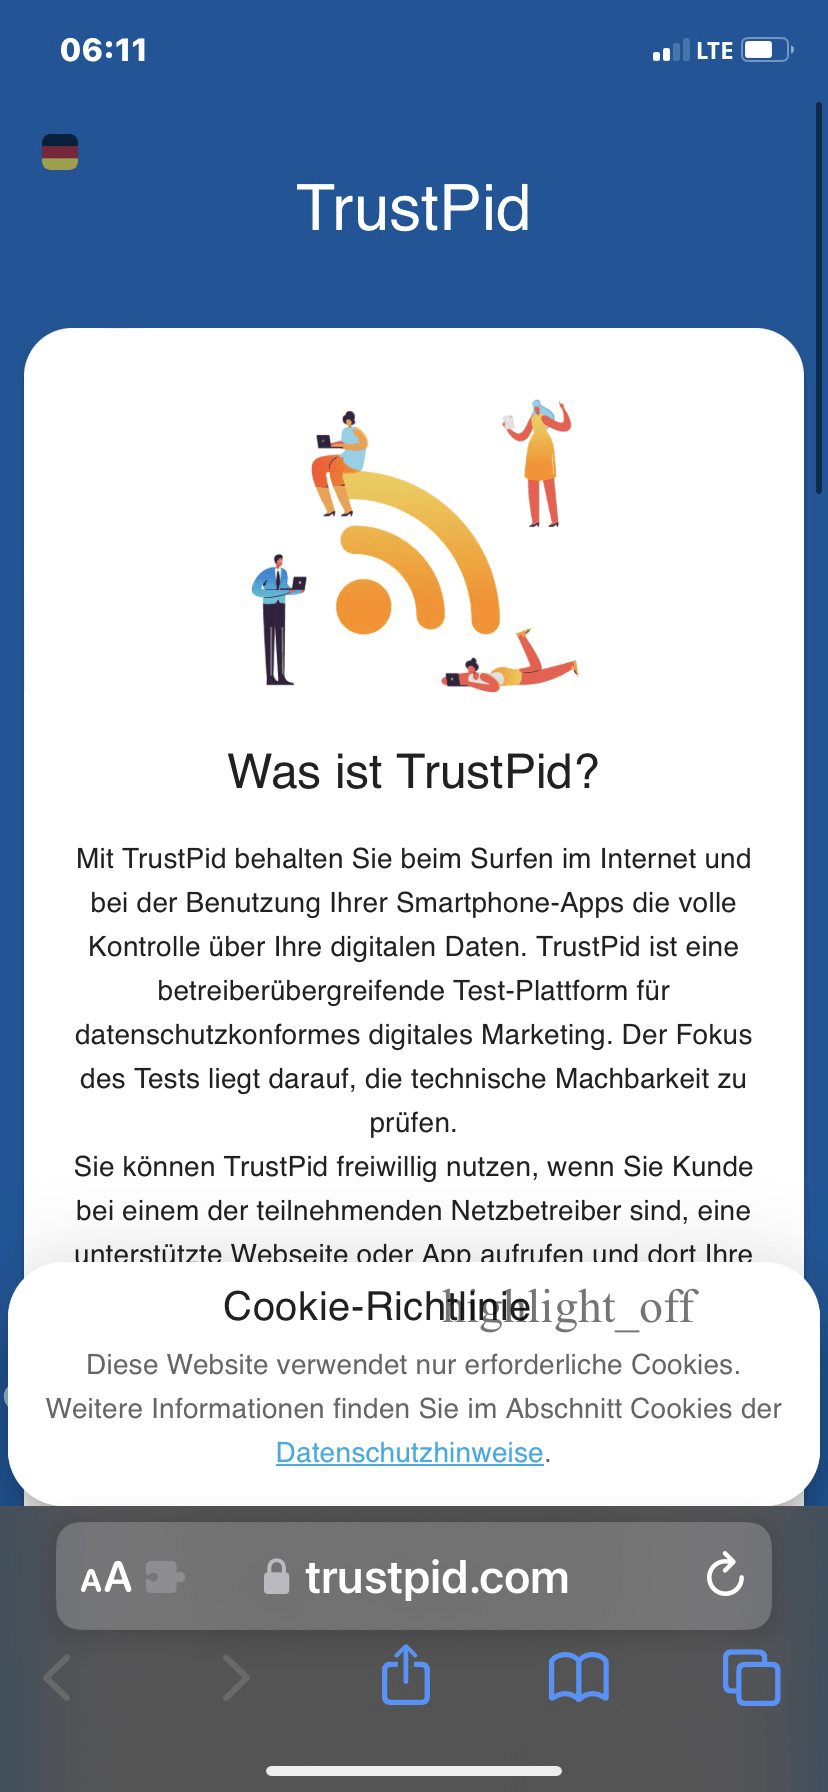 TrustPid Privacy Portal